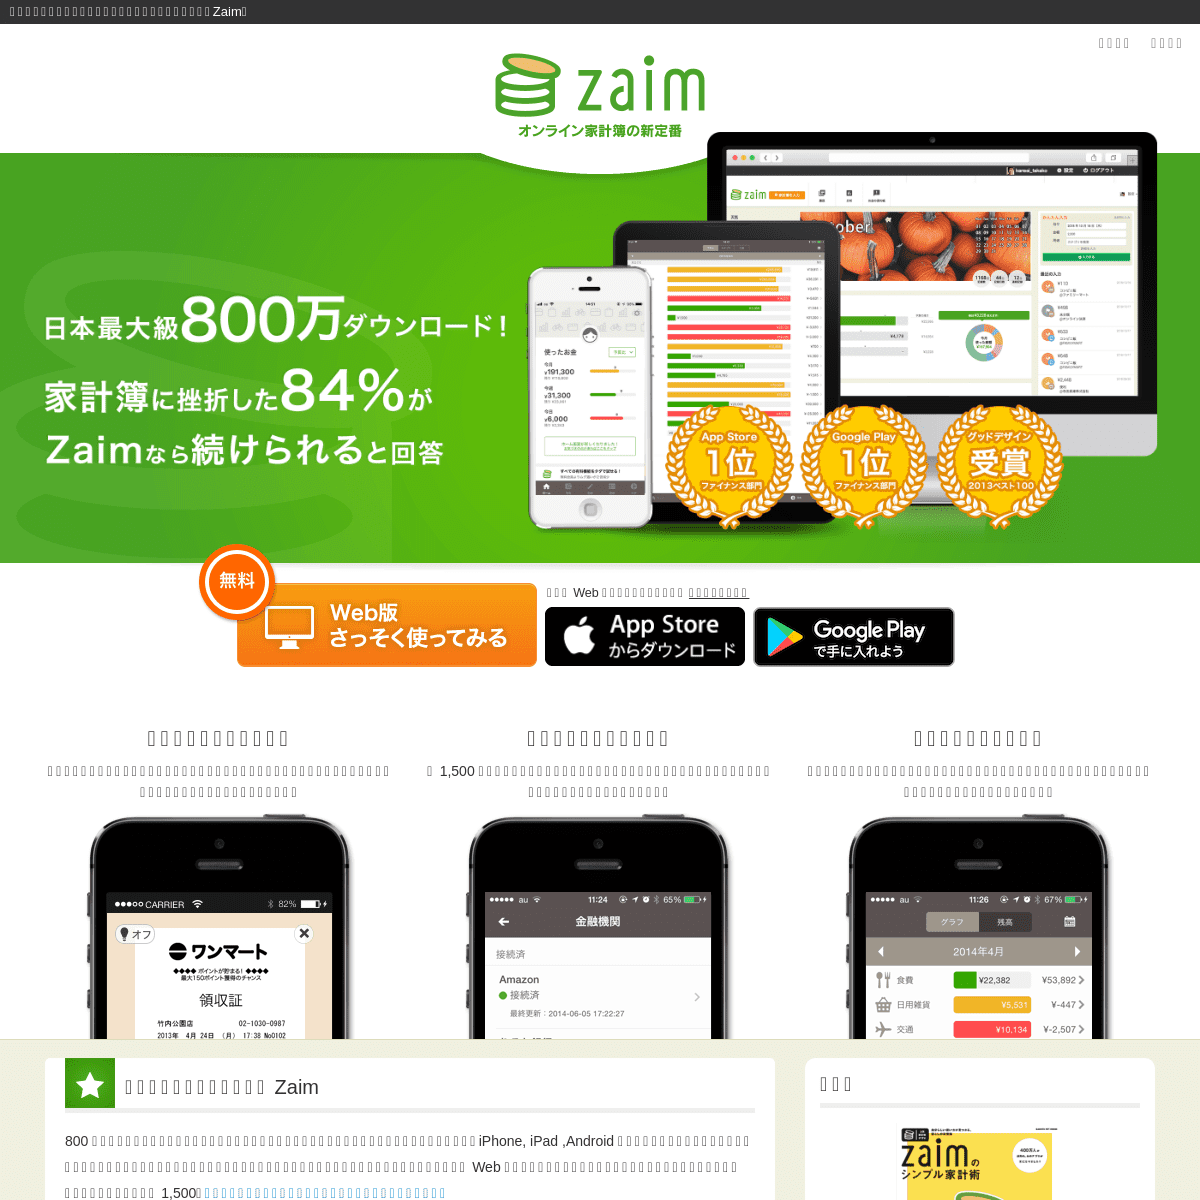 A complete backup of zaim.net